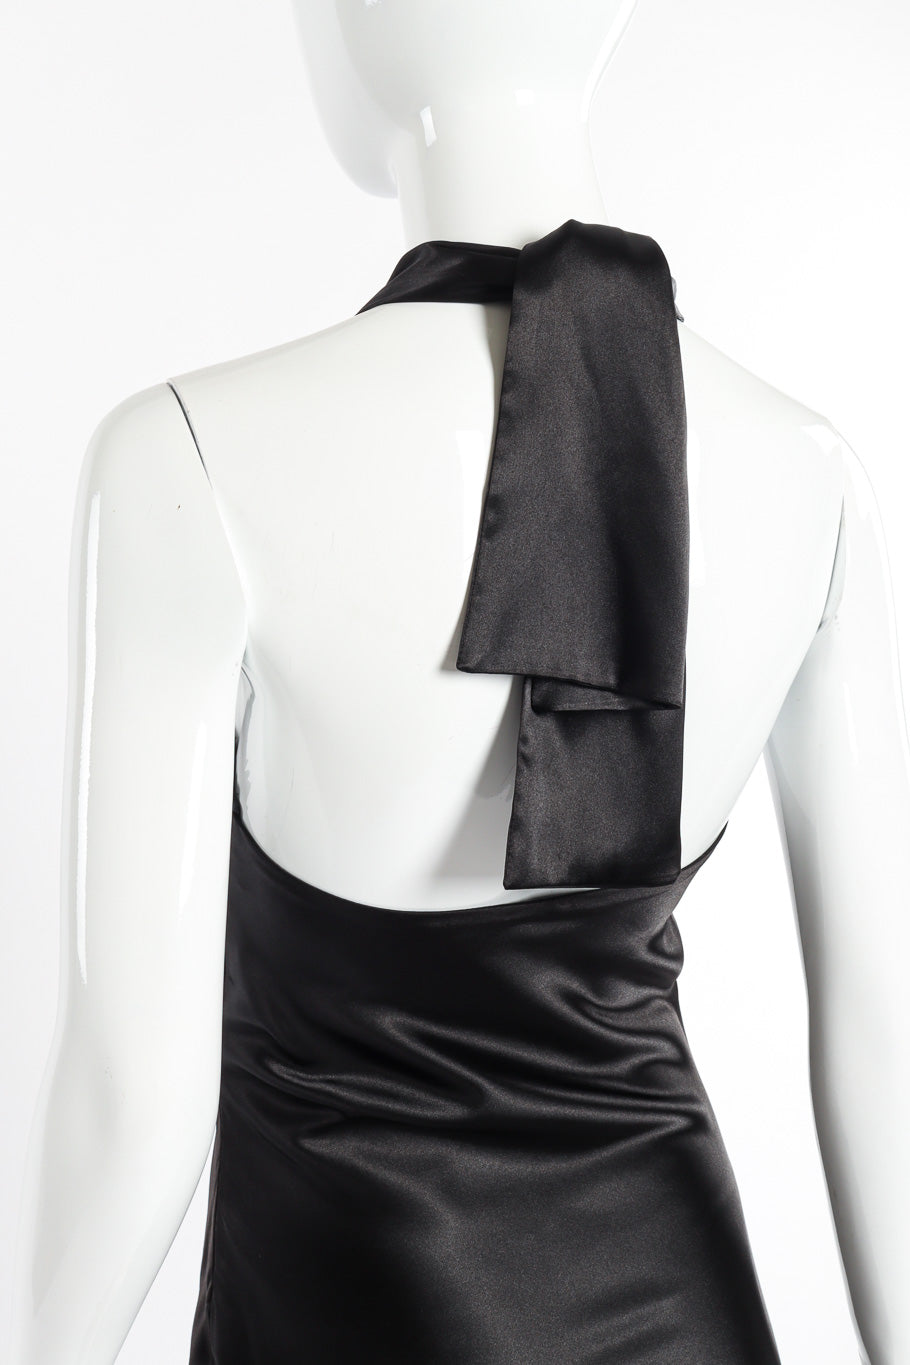 Christian Dior Silk Beaded Halter Dress back view on mannequin closeup @recessla